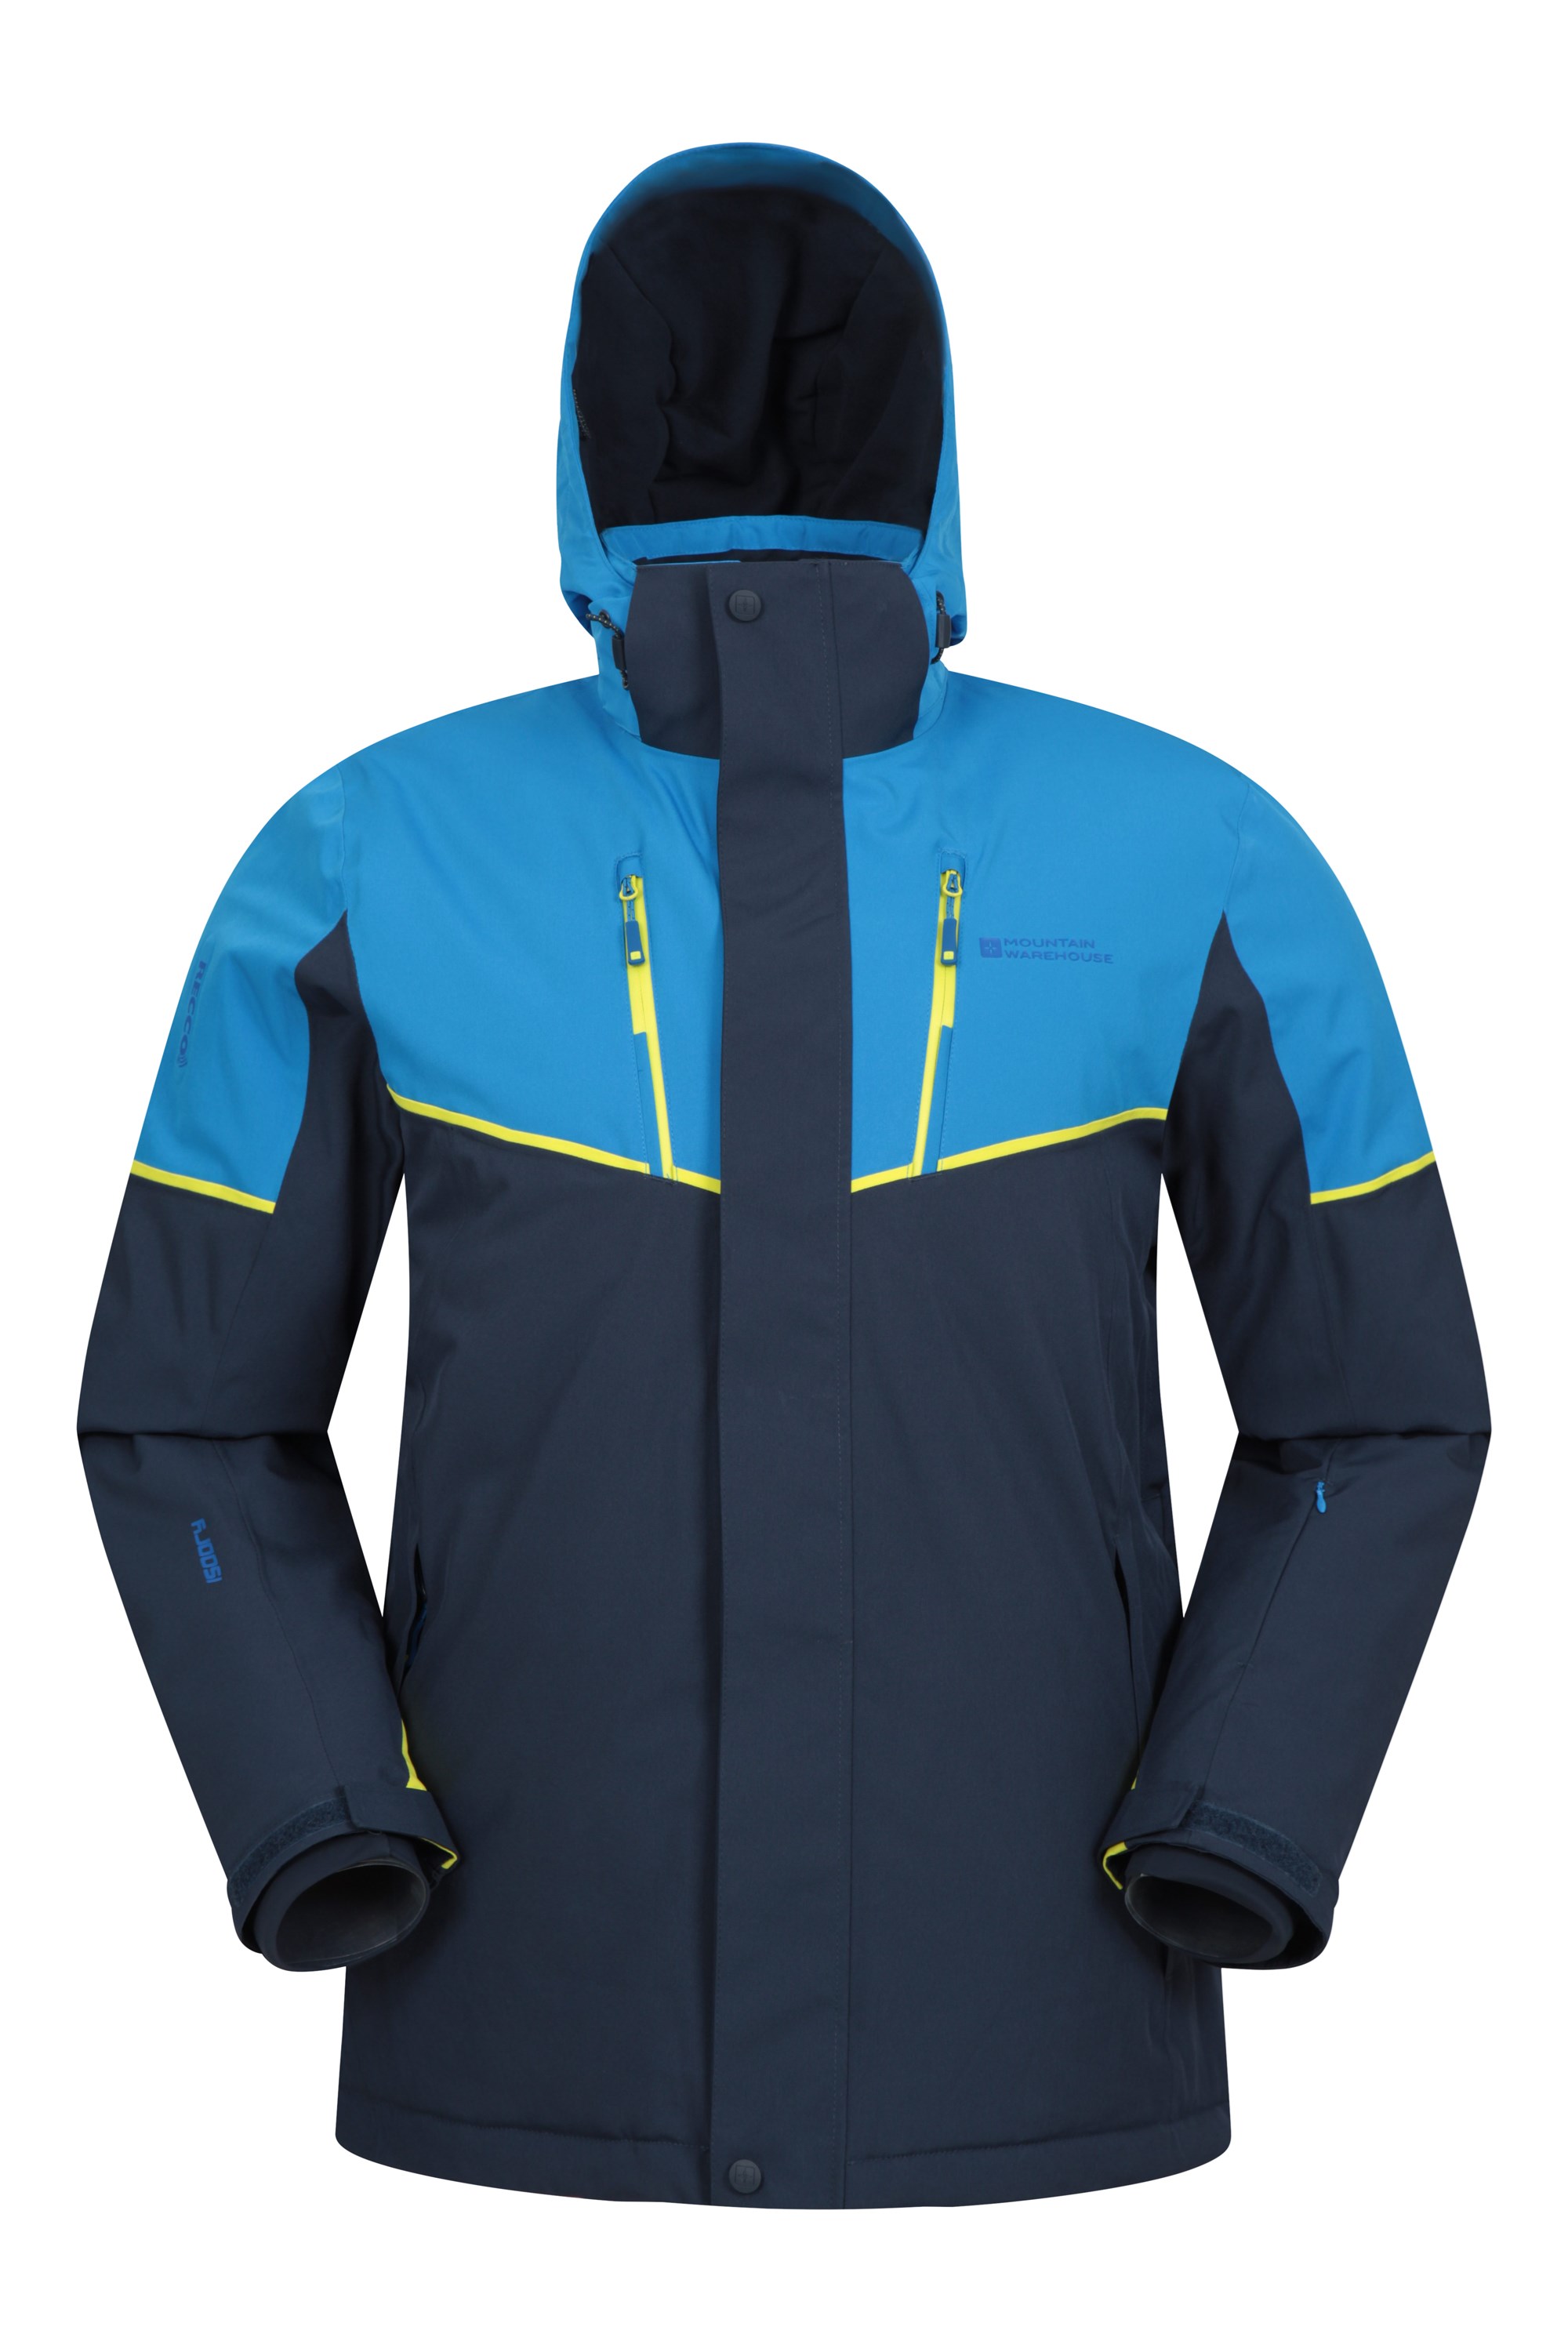 interval Onrustig Marine Ski Gear Sale | Ski Jacket & Pants Clearance | Mountain Warehouse US